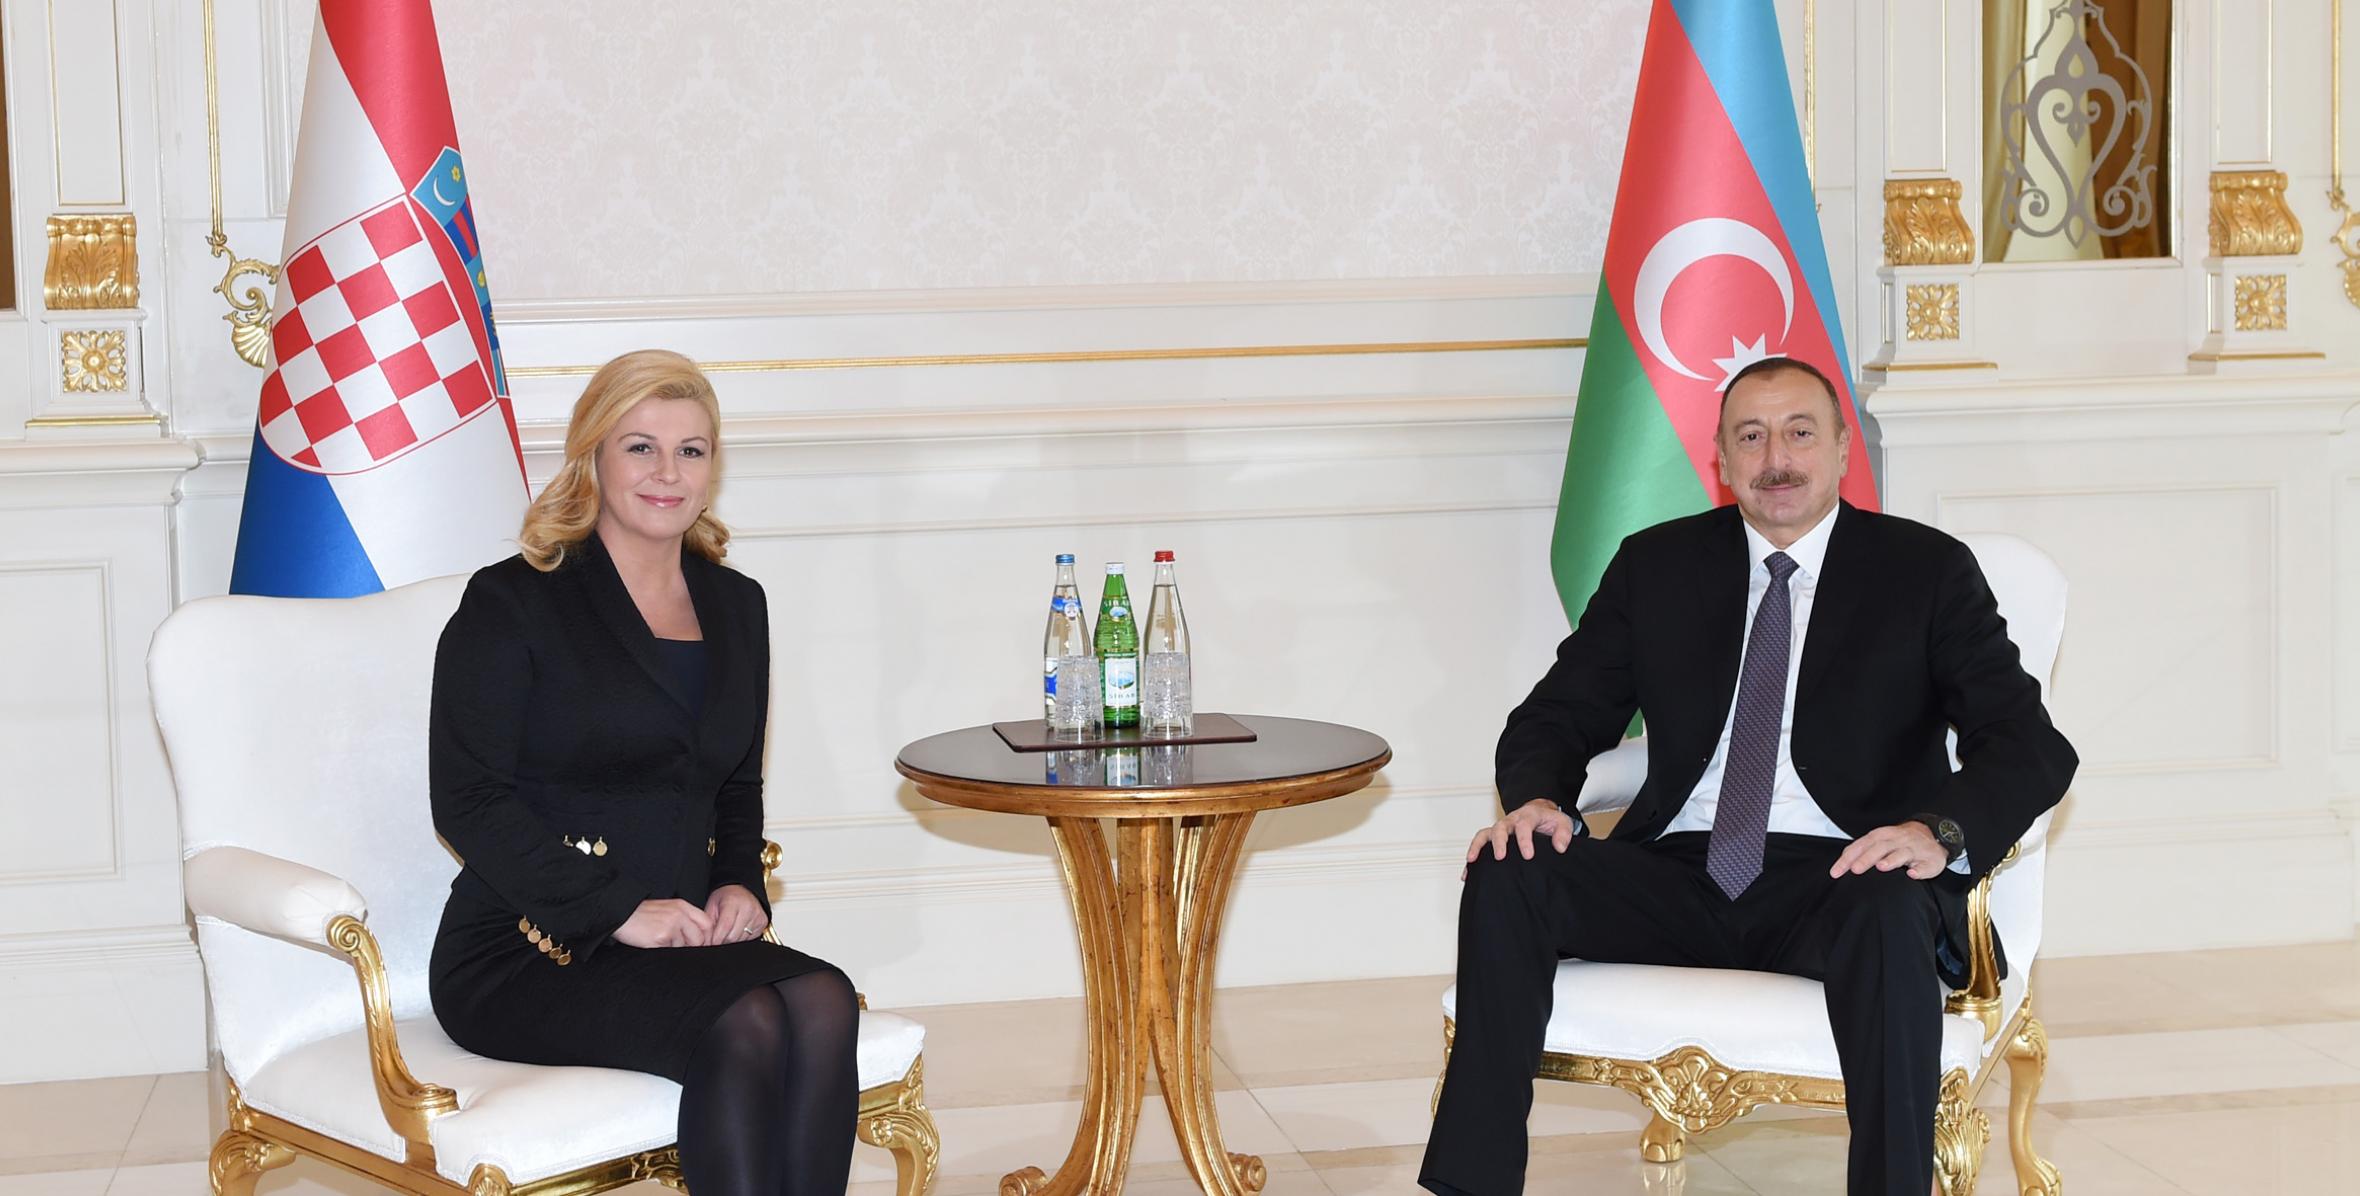 Presidents of Azerbaijan and Croatia met in private